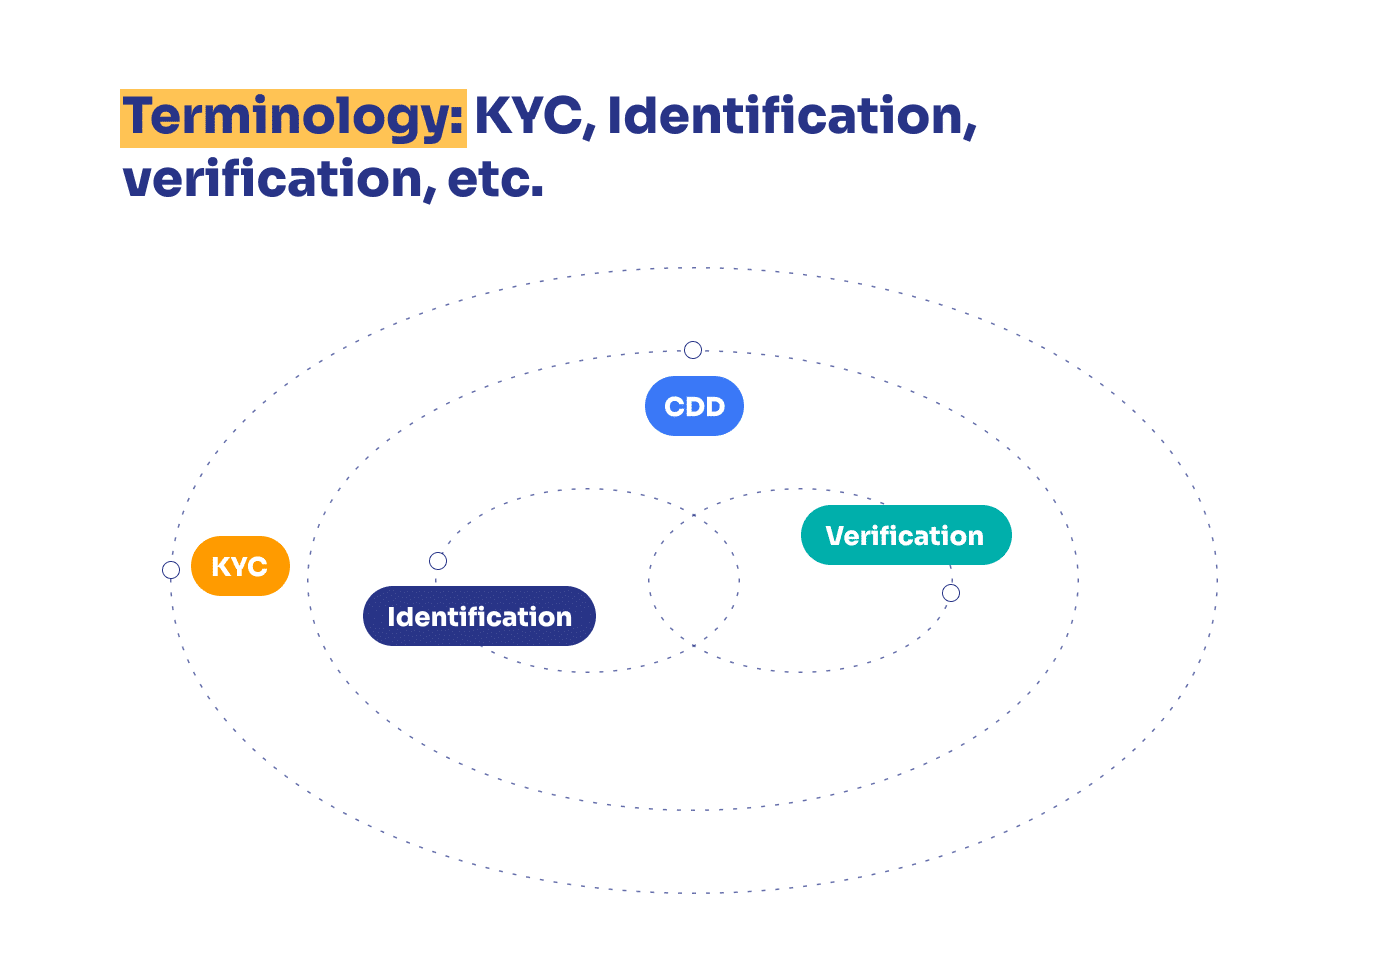 KYC verification and identification